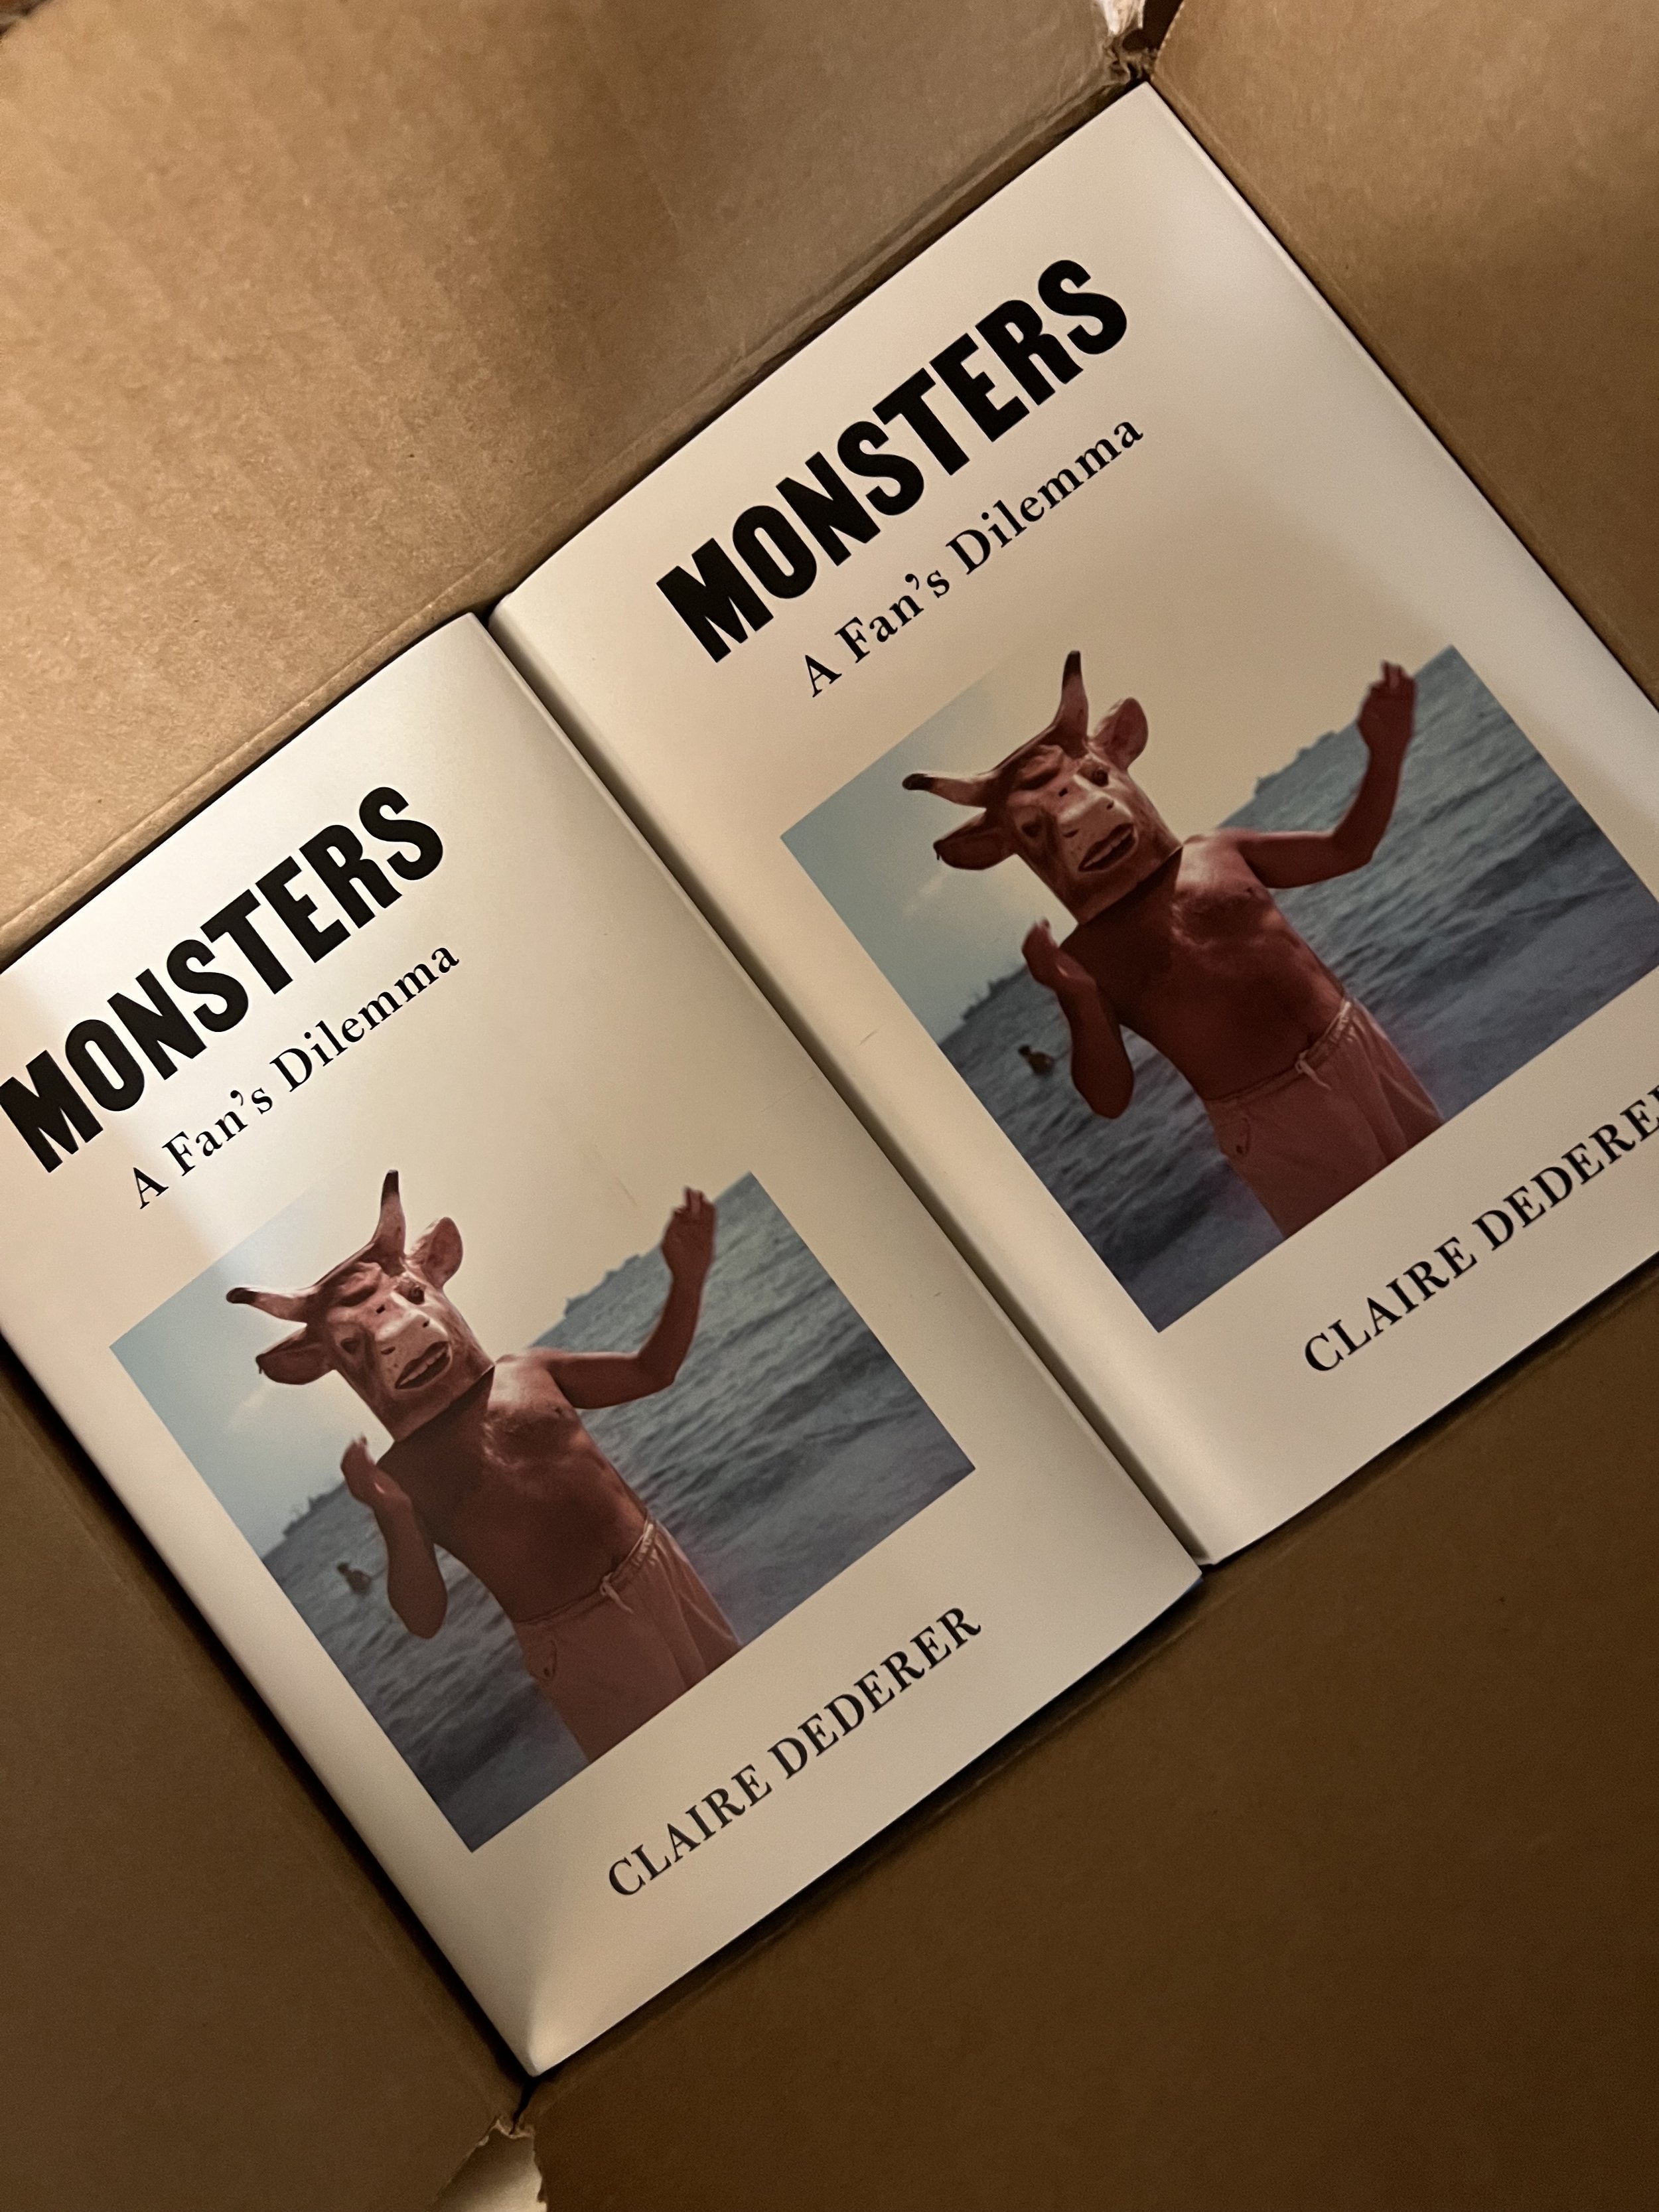 Claire Dederer's cancel-culture book 'Monsters: A Fan's Dilemma' - Los  Angeles Times